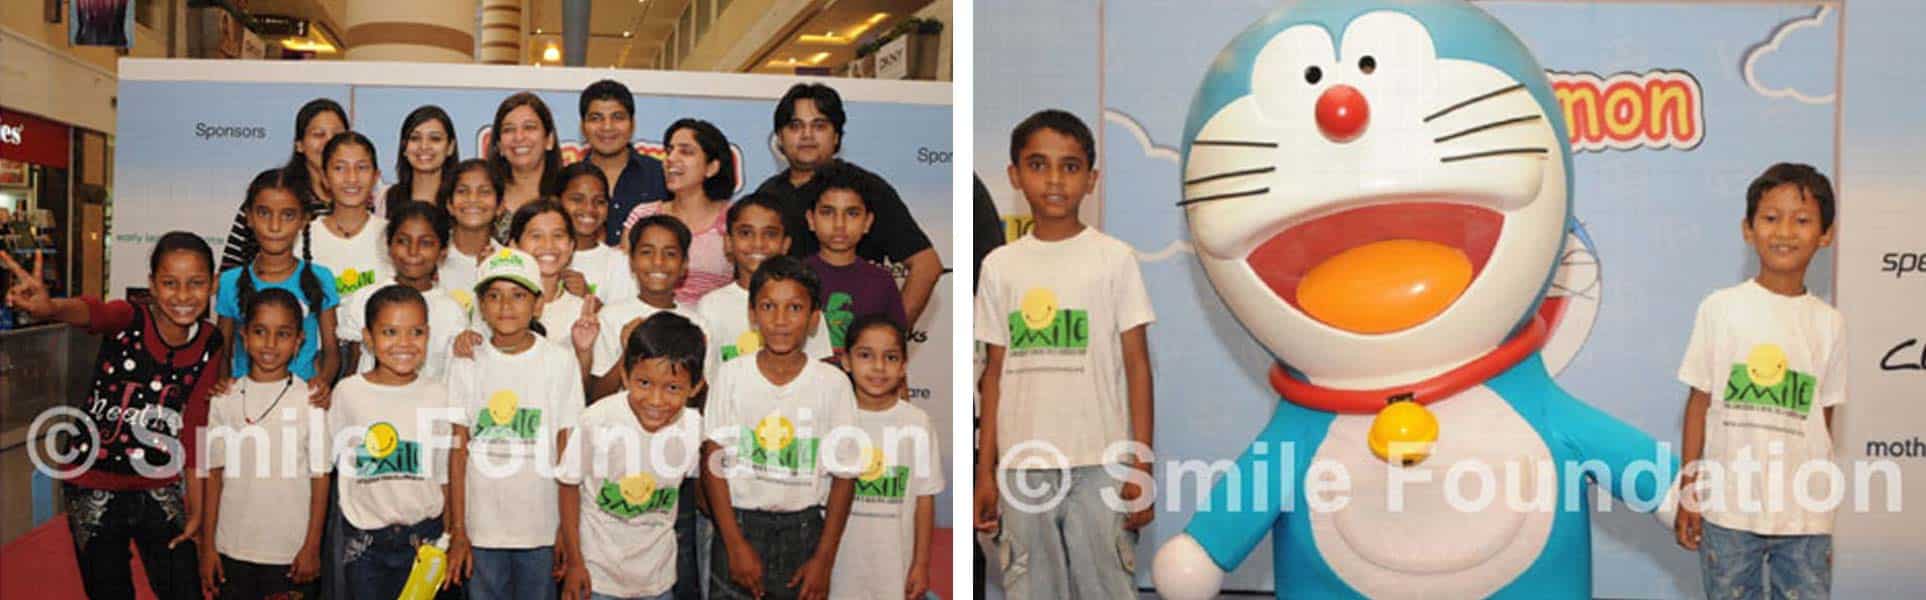 Smile Foundation kids enjoy with Doraemon at DLF Place Saket